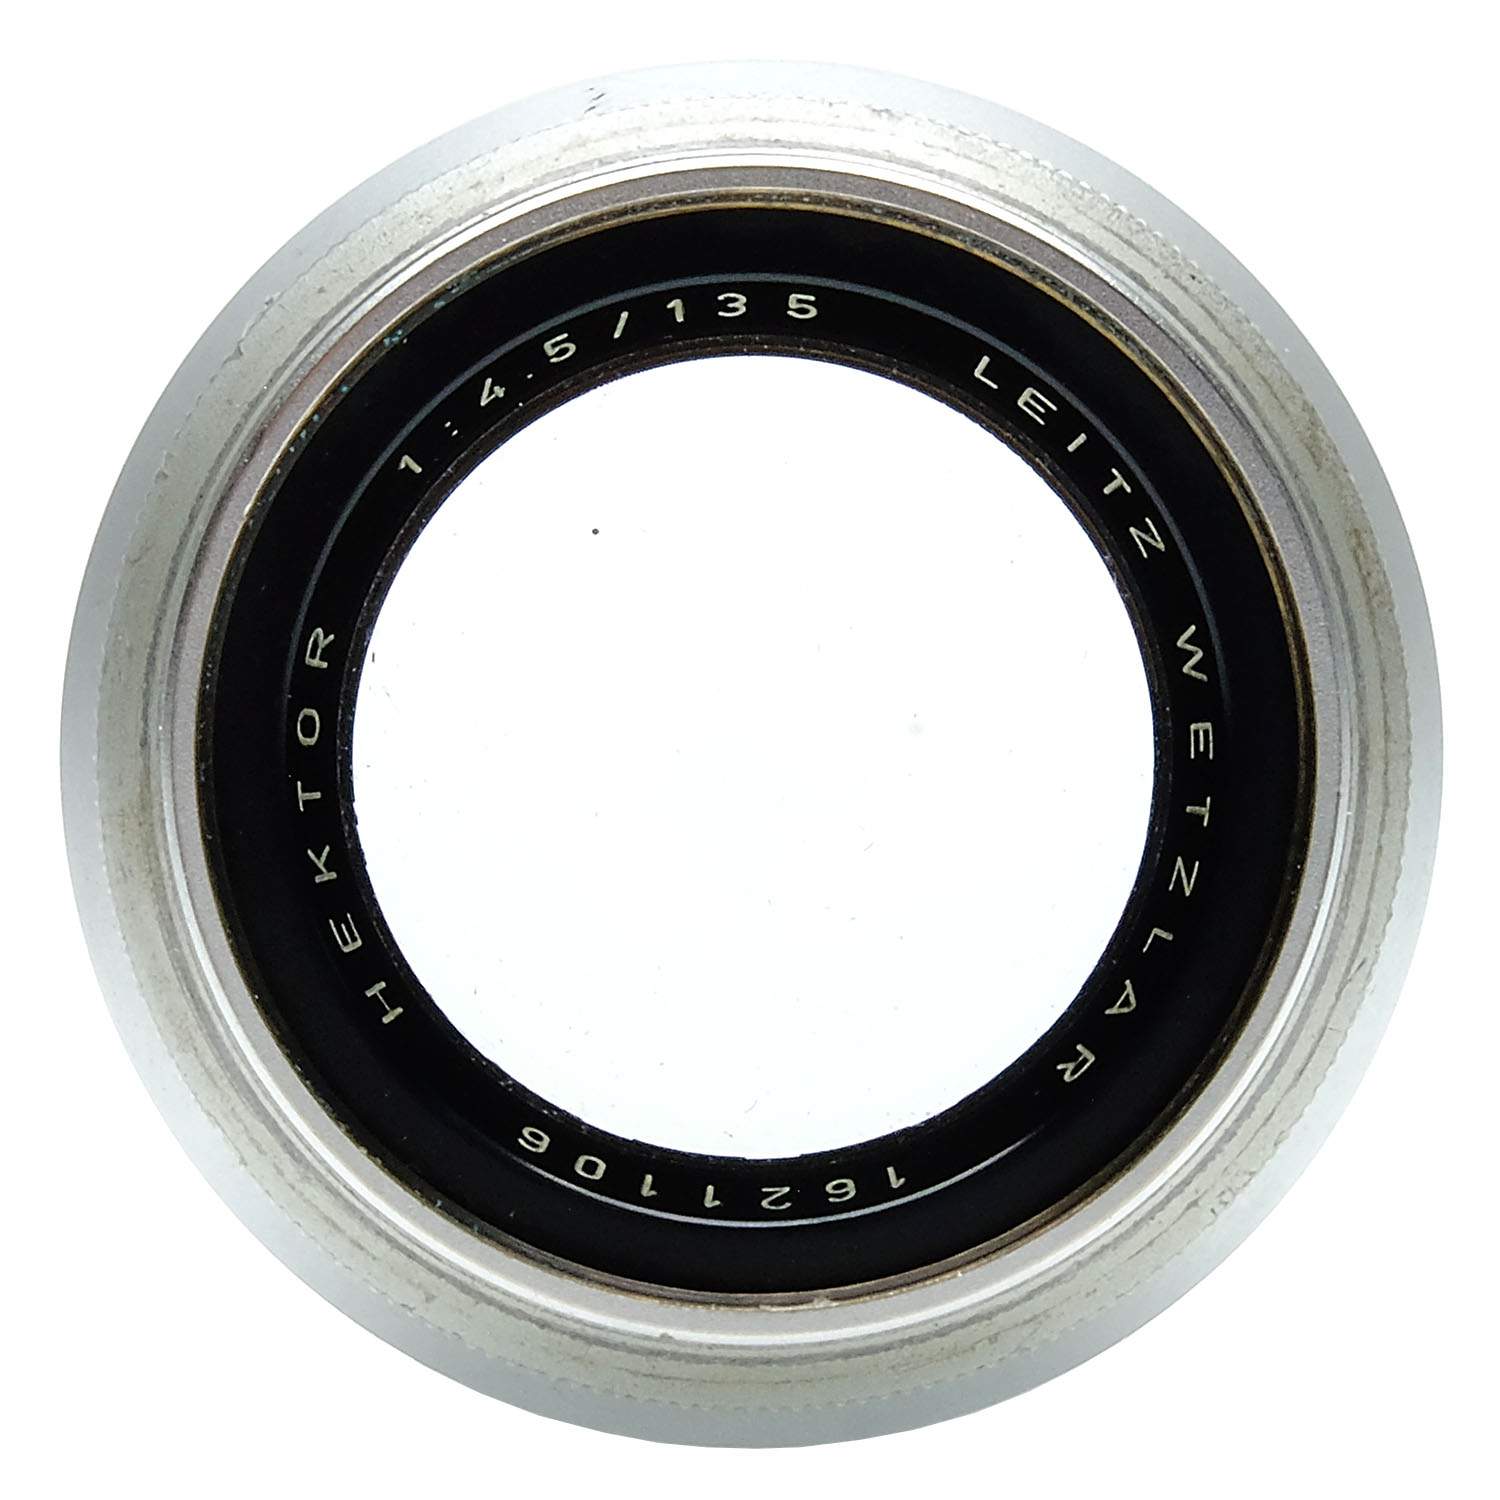 Leica 13.5cm f4.5 Hektor 1621106